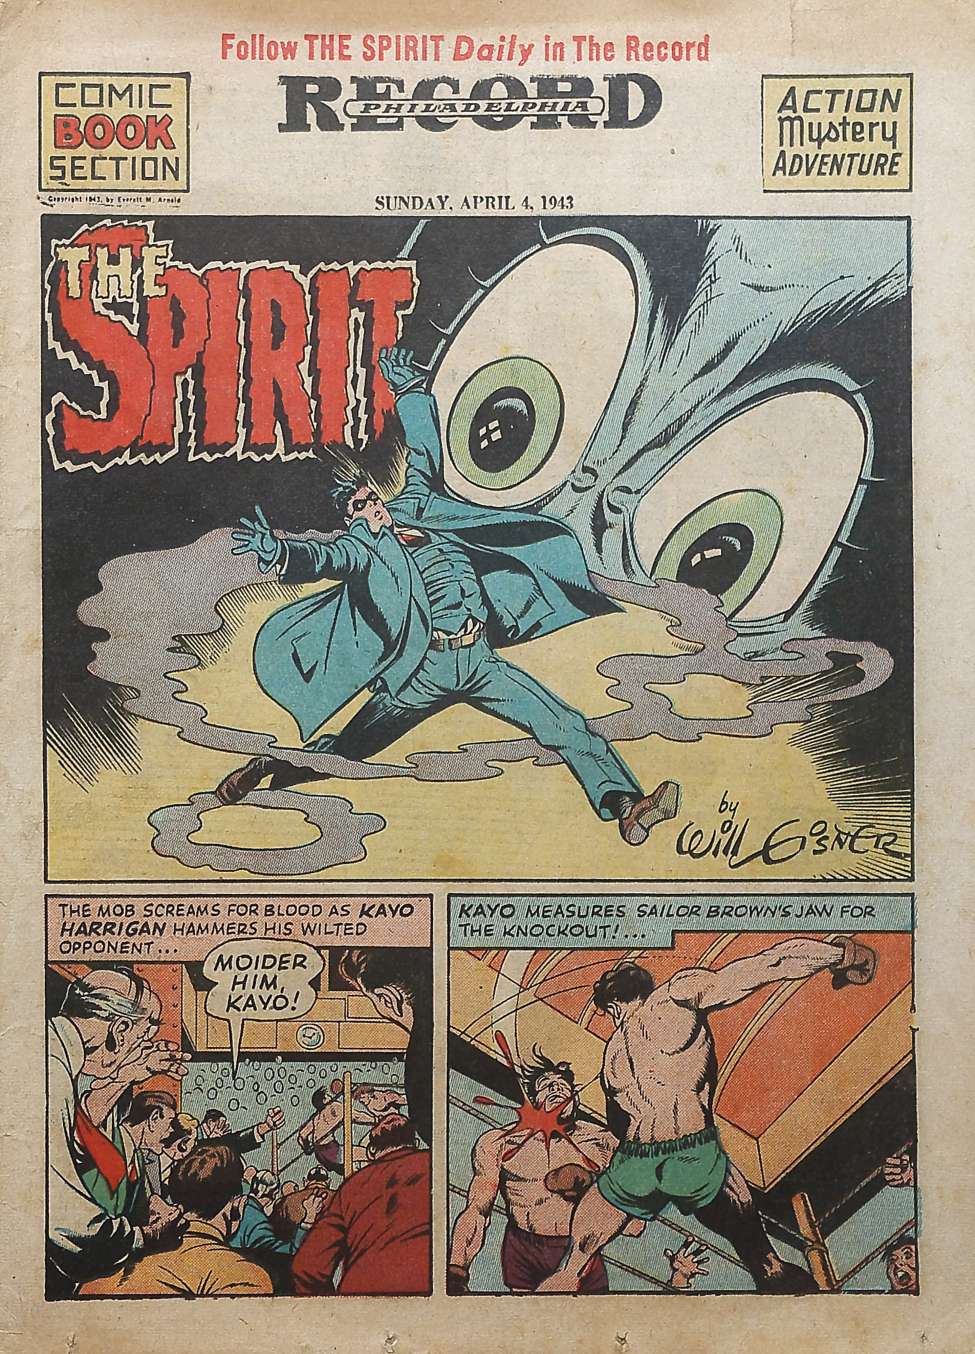 Comic Book Cover For The Spirit (1943-04-04) - Philadelphia Record